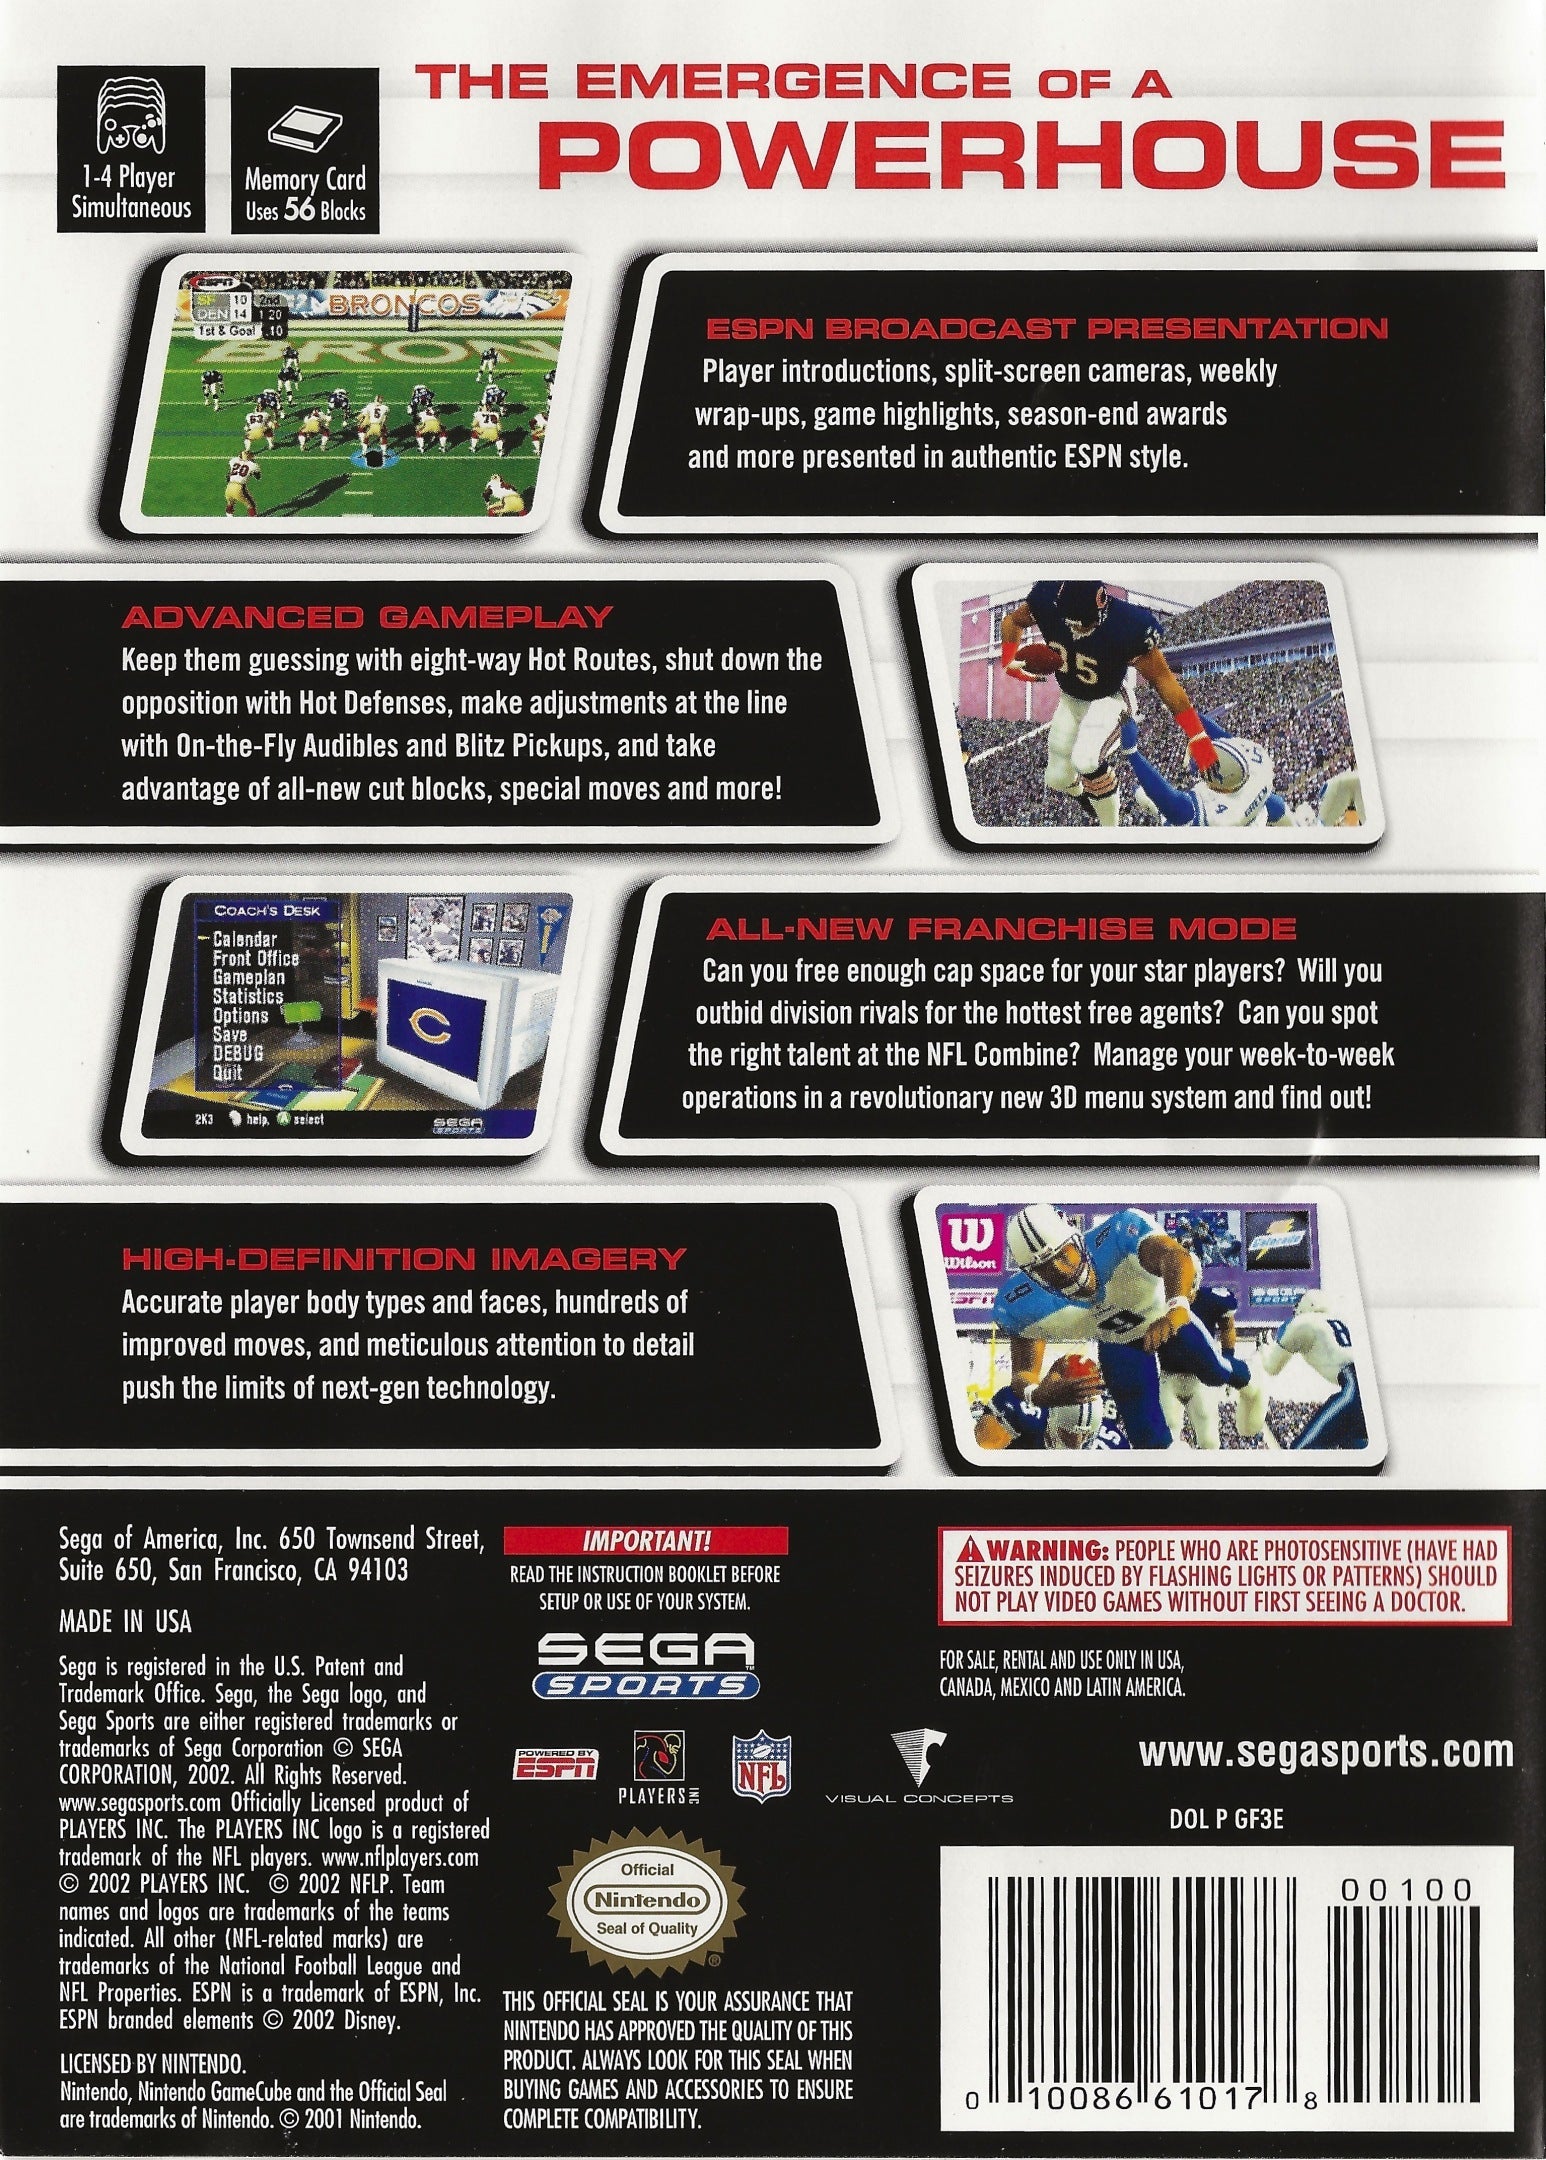 NFL 2K3 - (GC) GameCube [Pre-Owned] Video Games Sega   